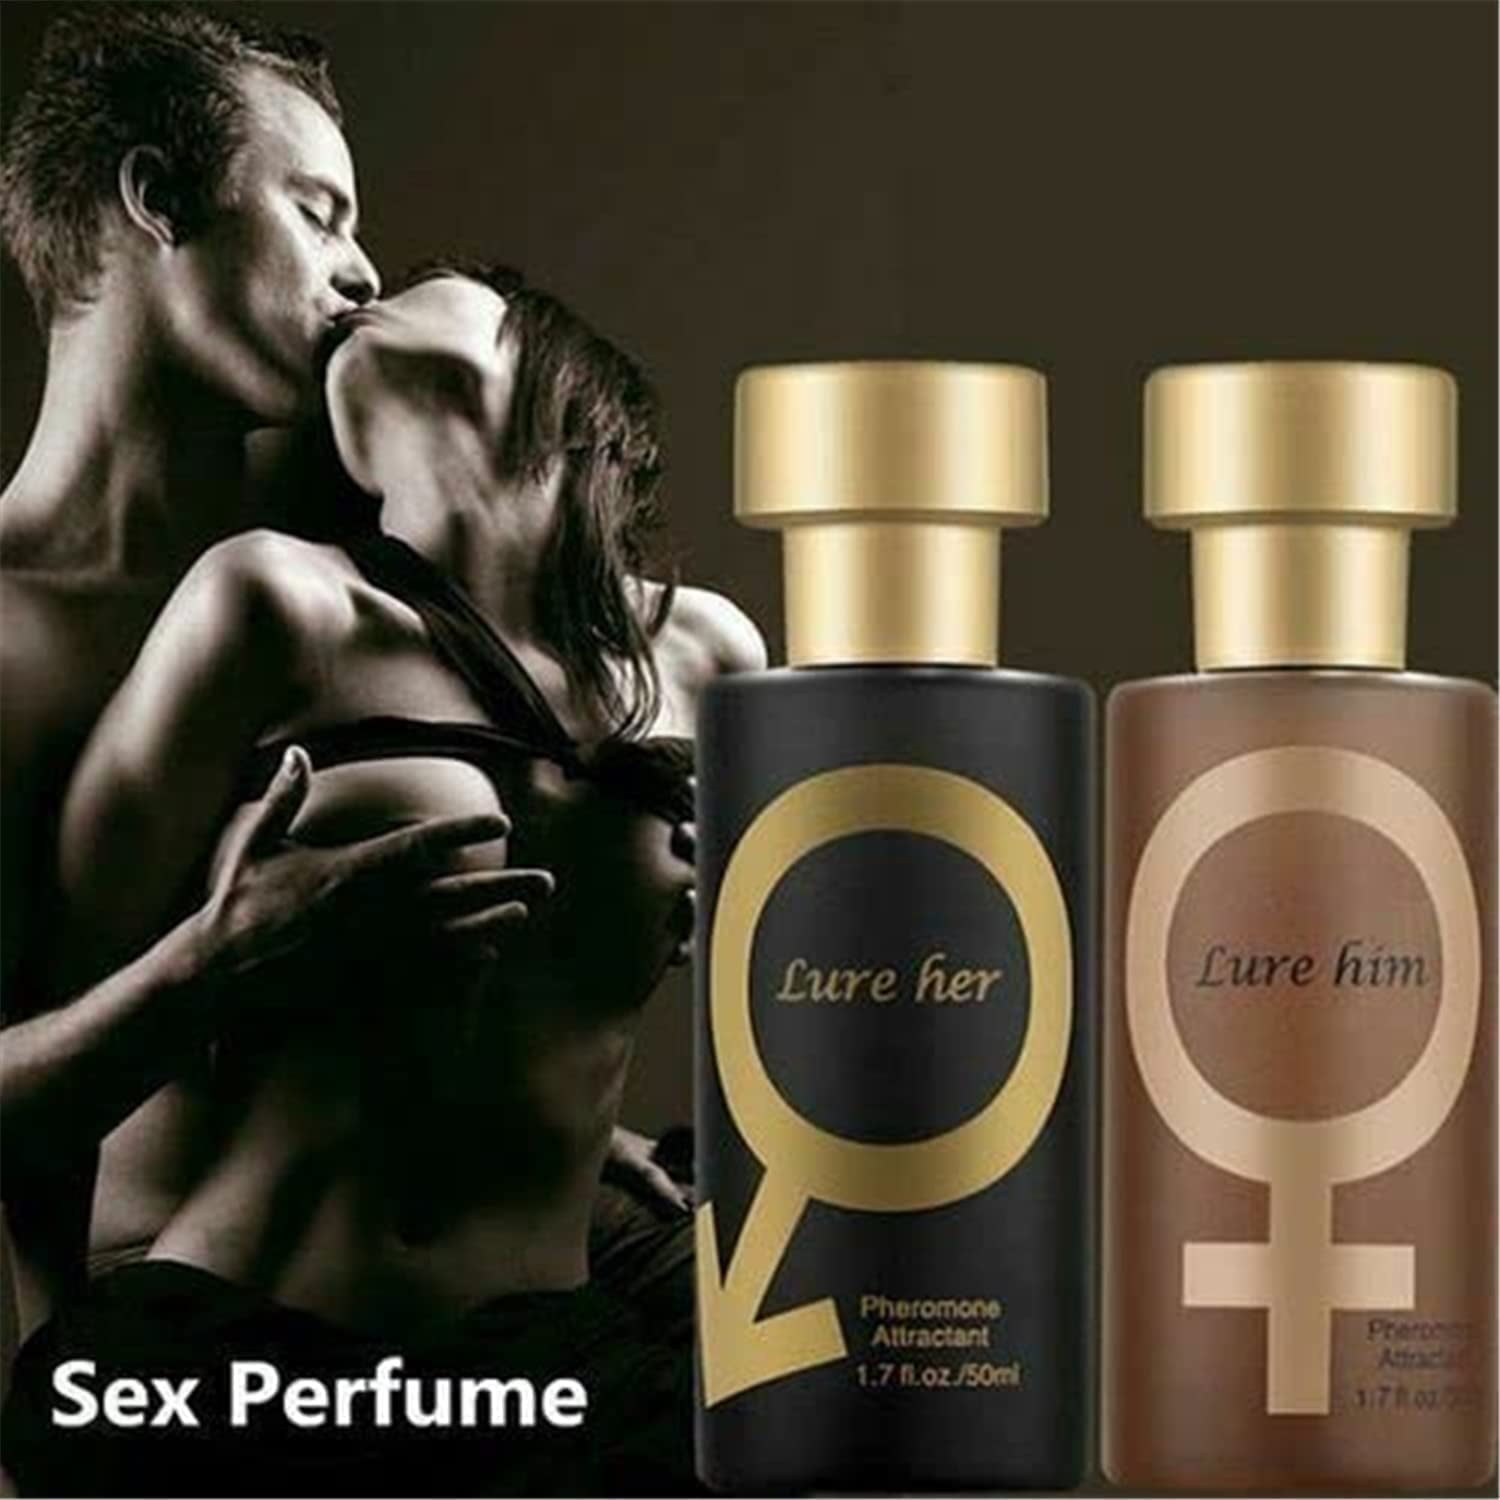 Lure her pheromone fragrance #fragrance #fragrances #fragrancetok #den